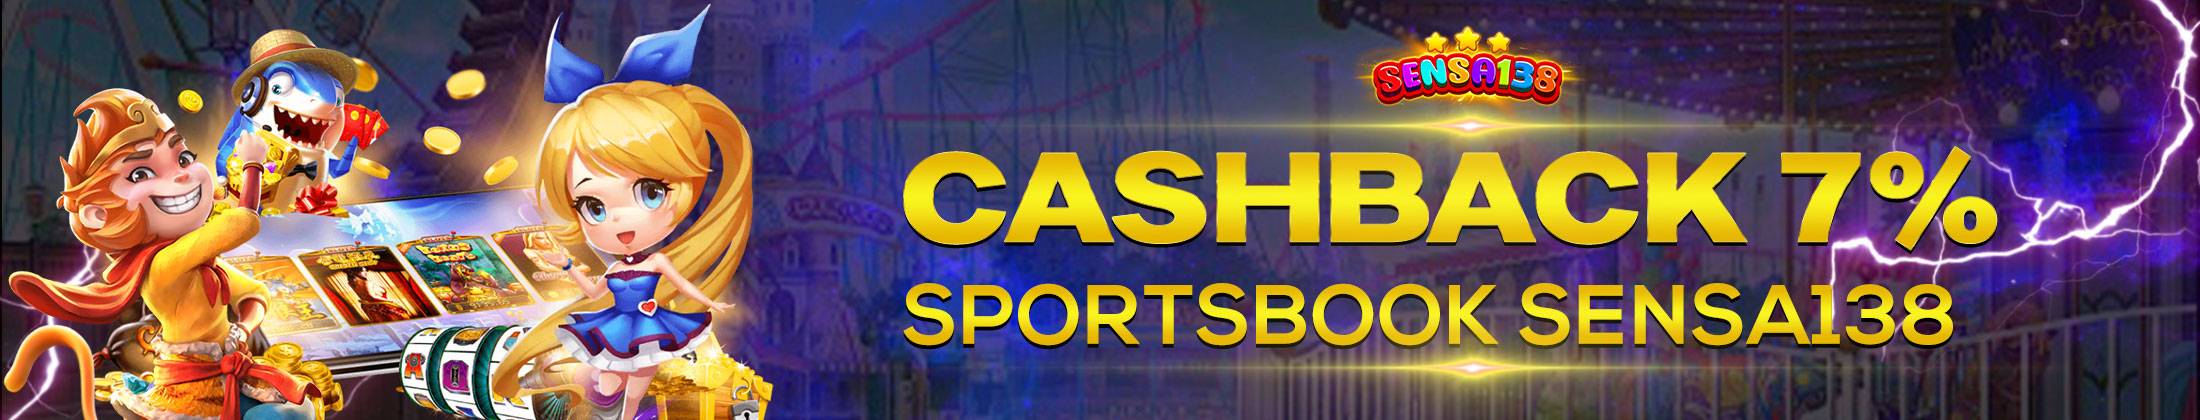 Cashback Sportsbook 7%